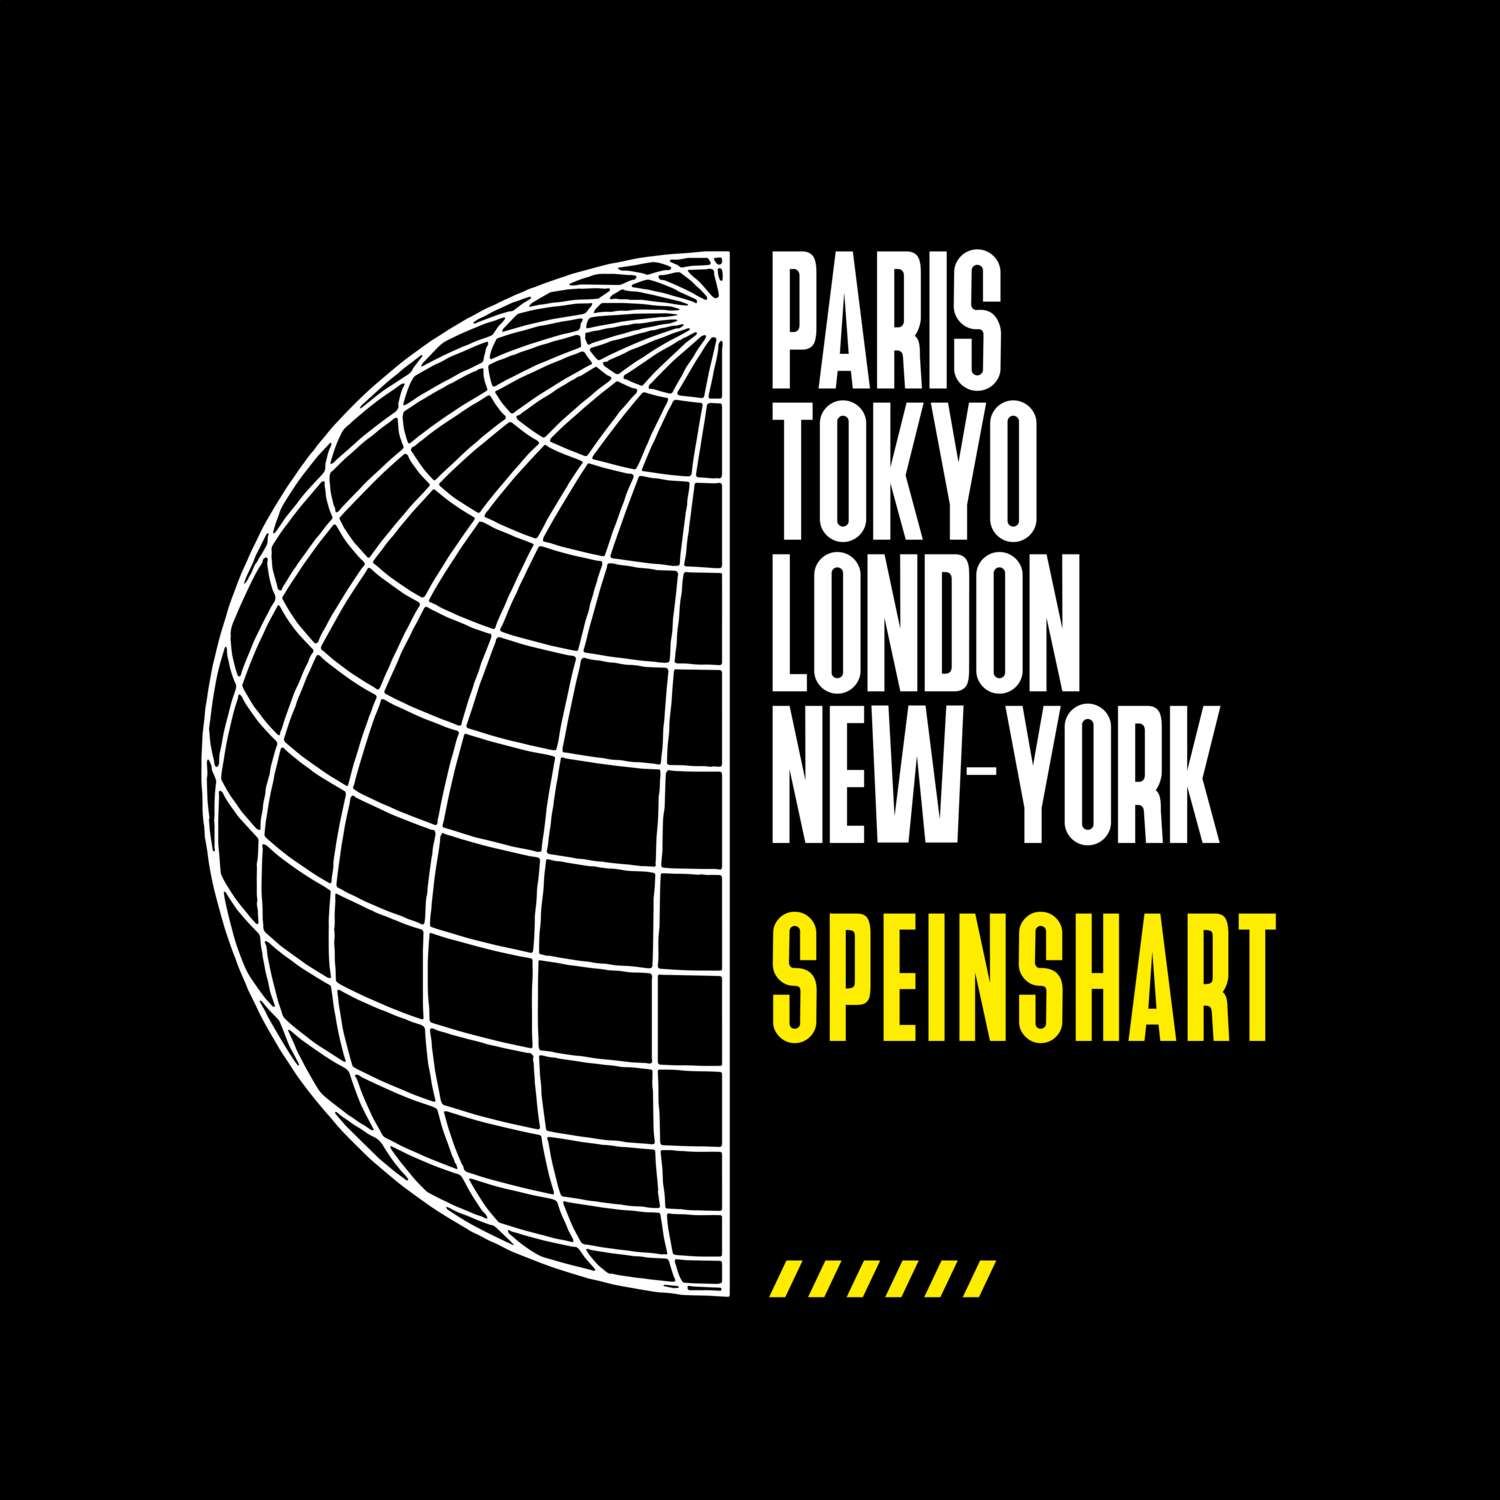 Speinshart T-Shirt »Paris Tokyo London«